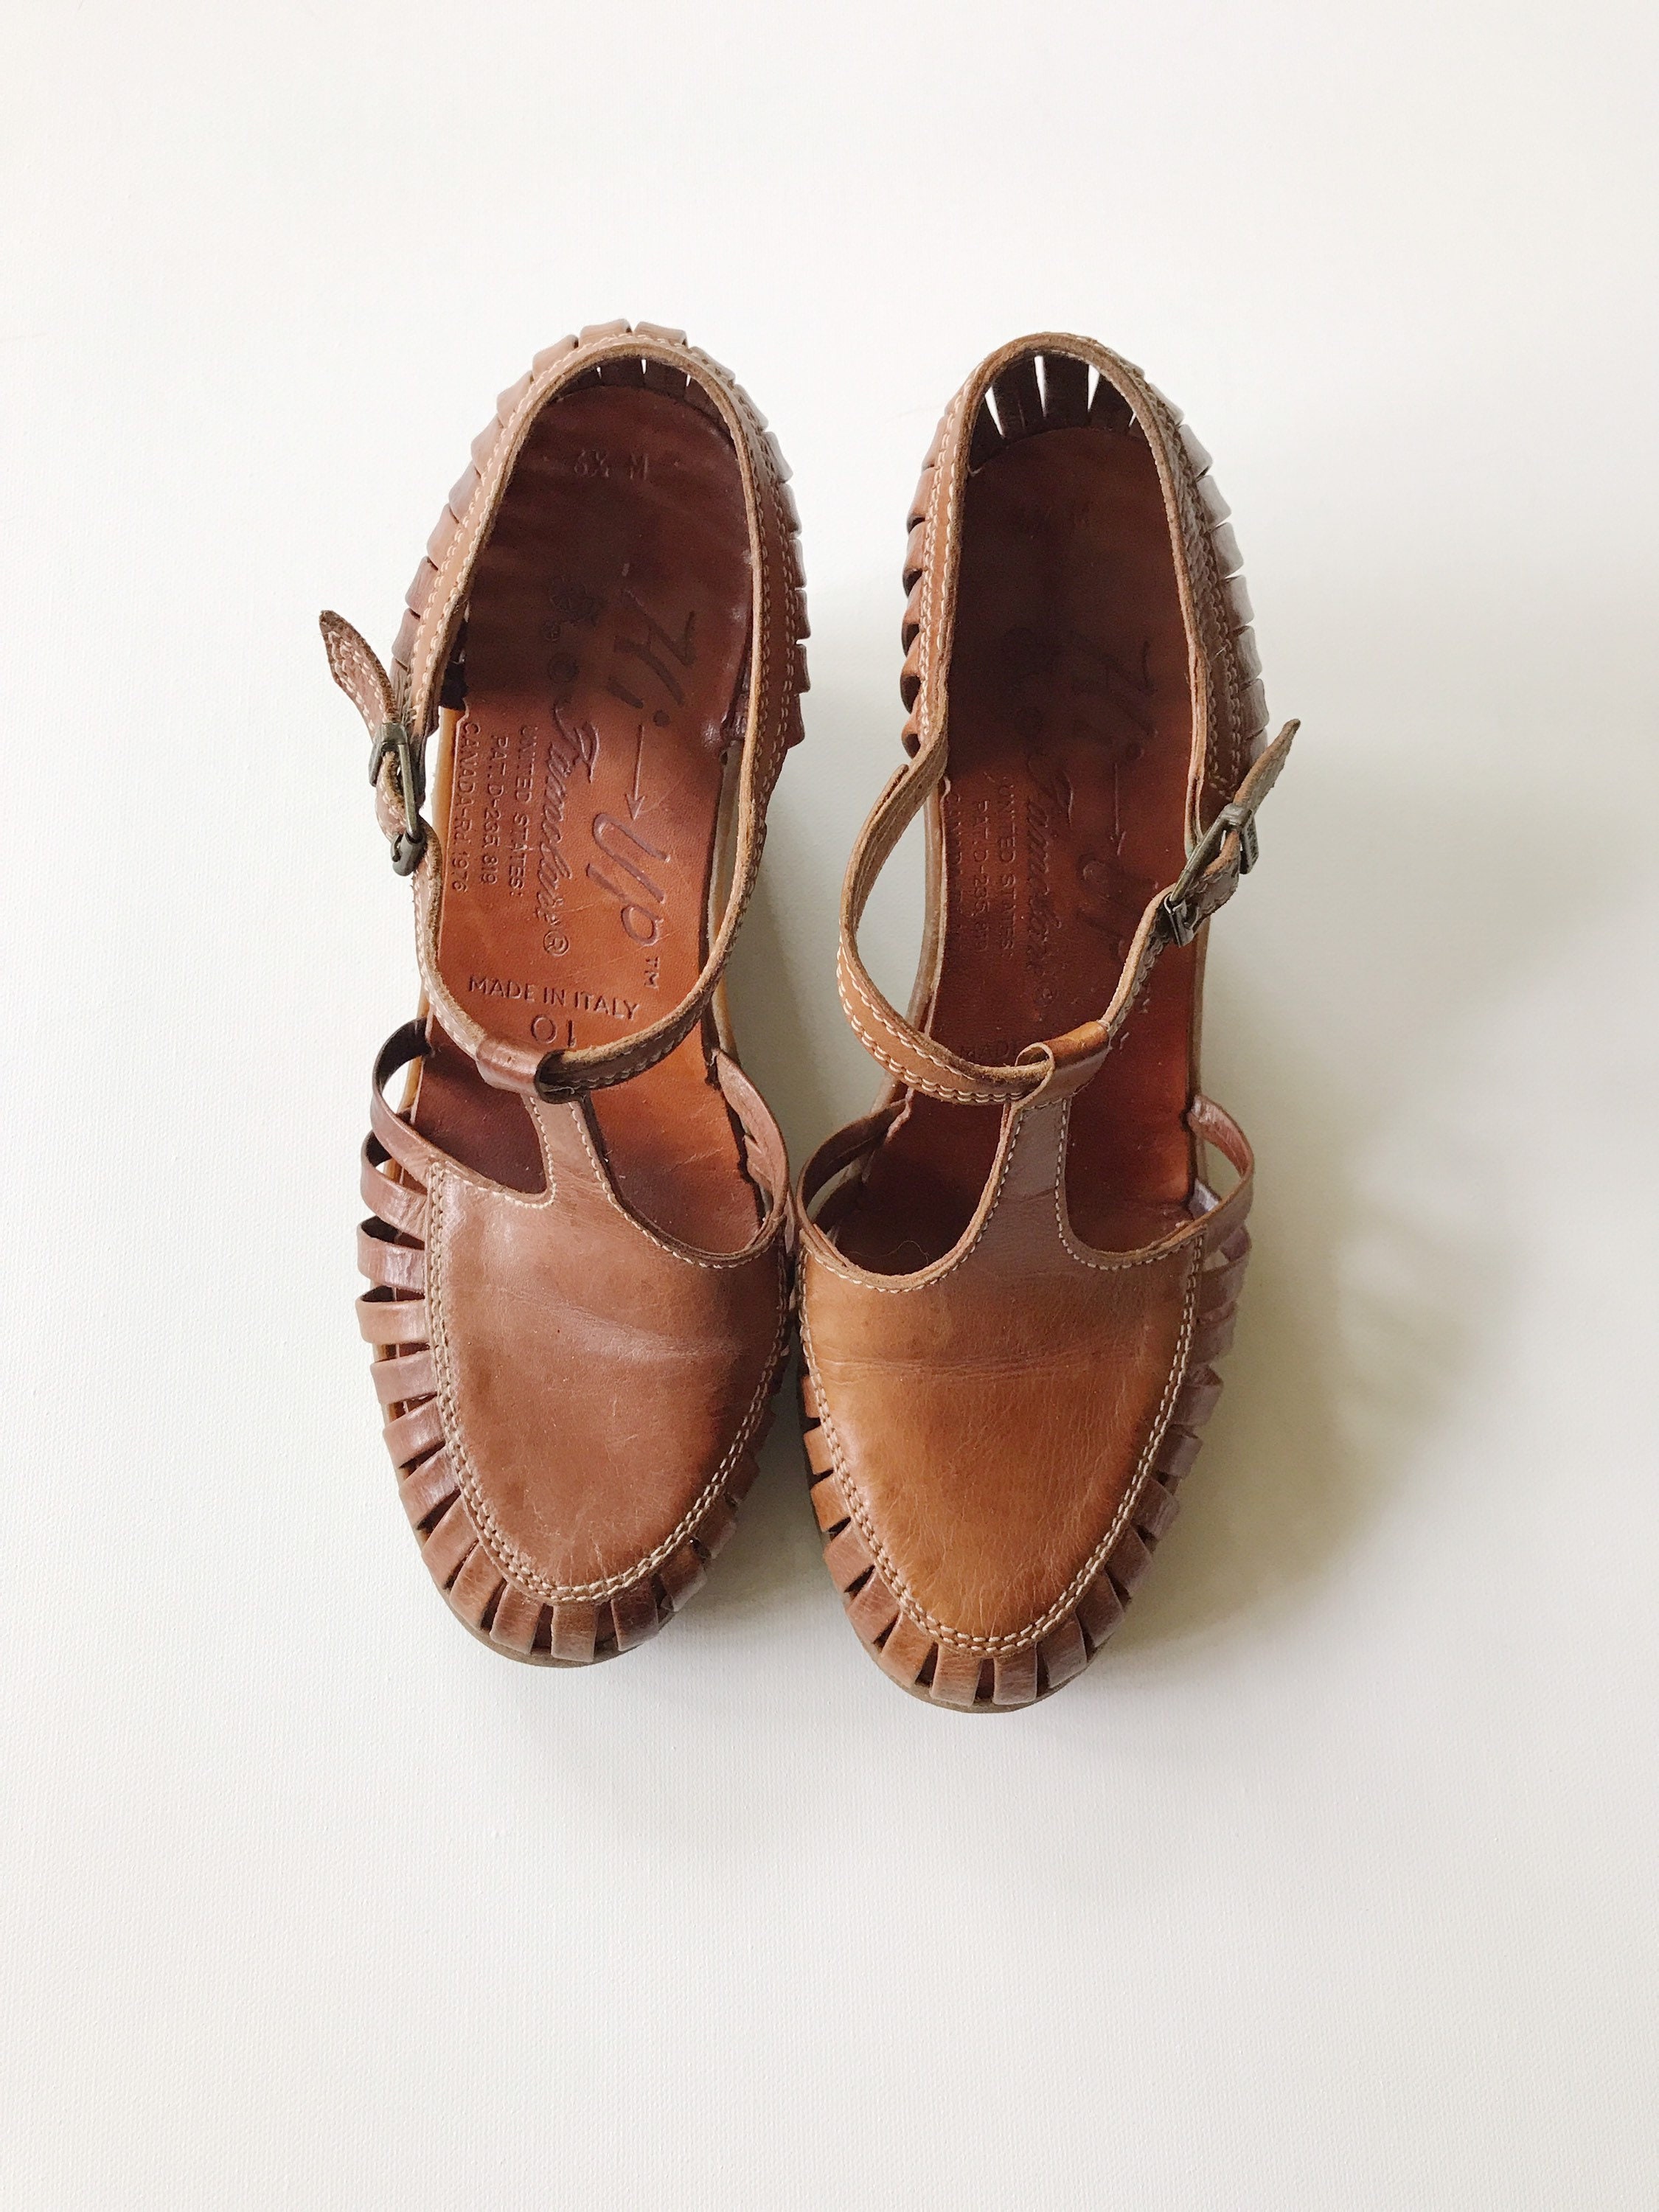 vintage Famolare shoes / 70s platform shoes / Caged sandals